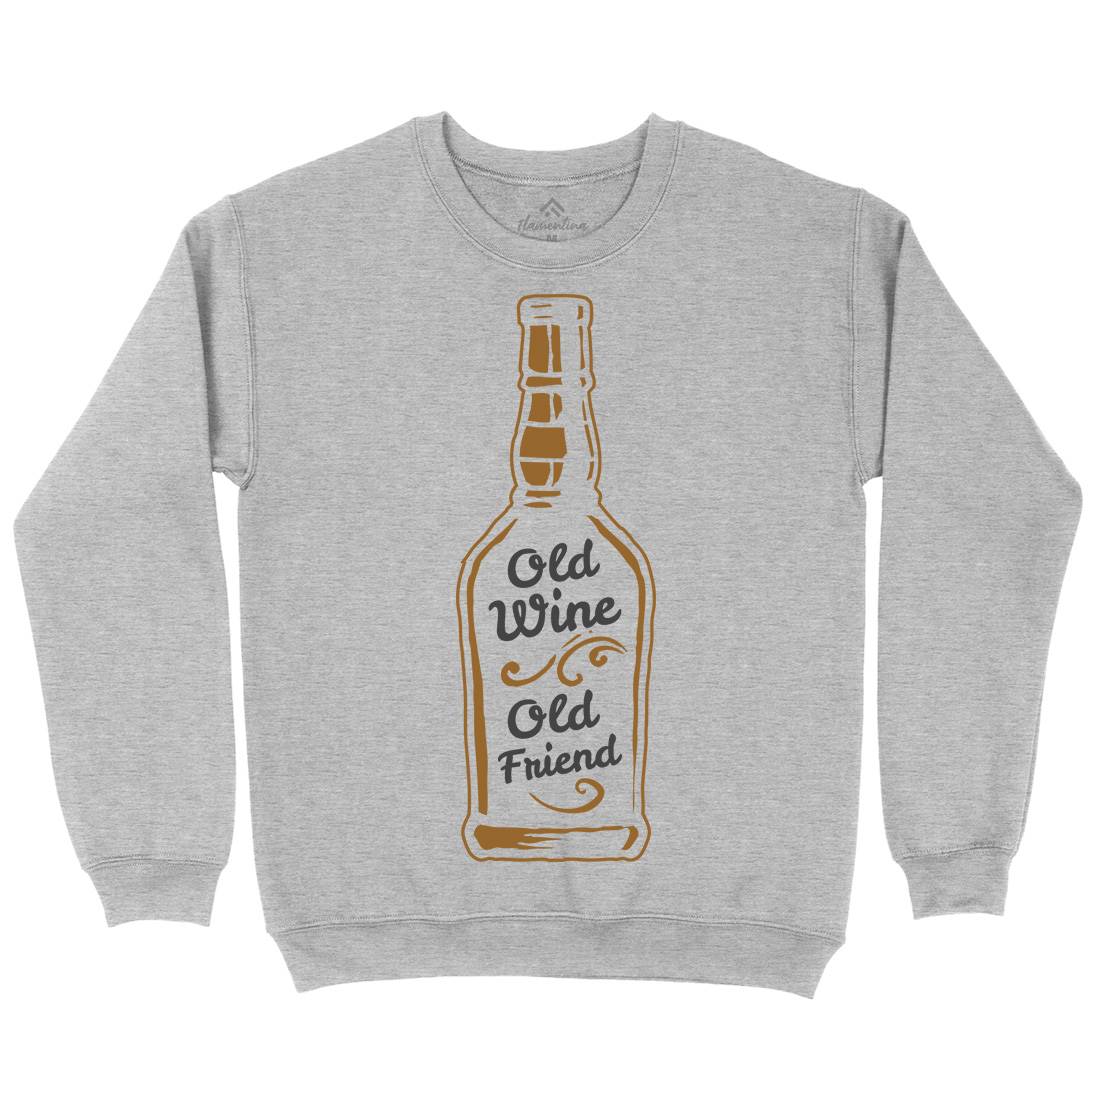 Old Wine Kids Crew Neck Sweatshirt Quotes A357